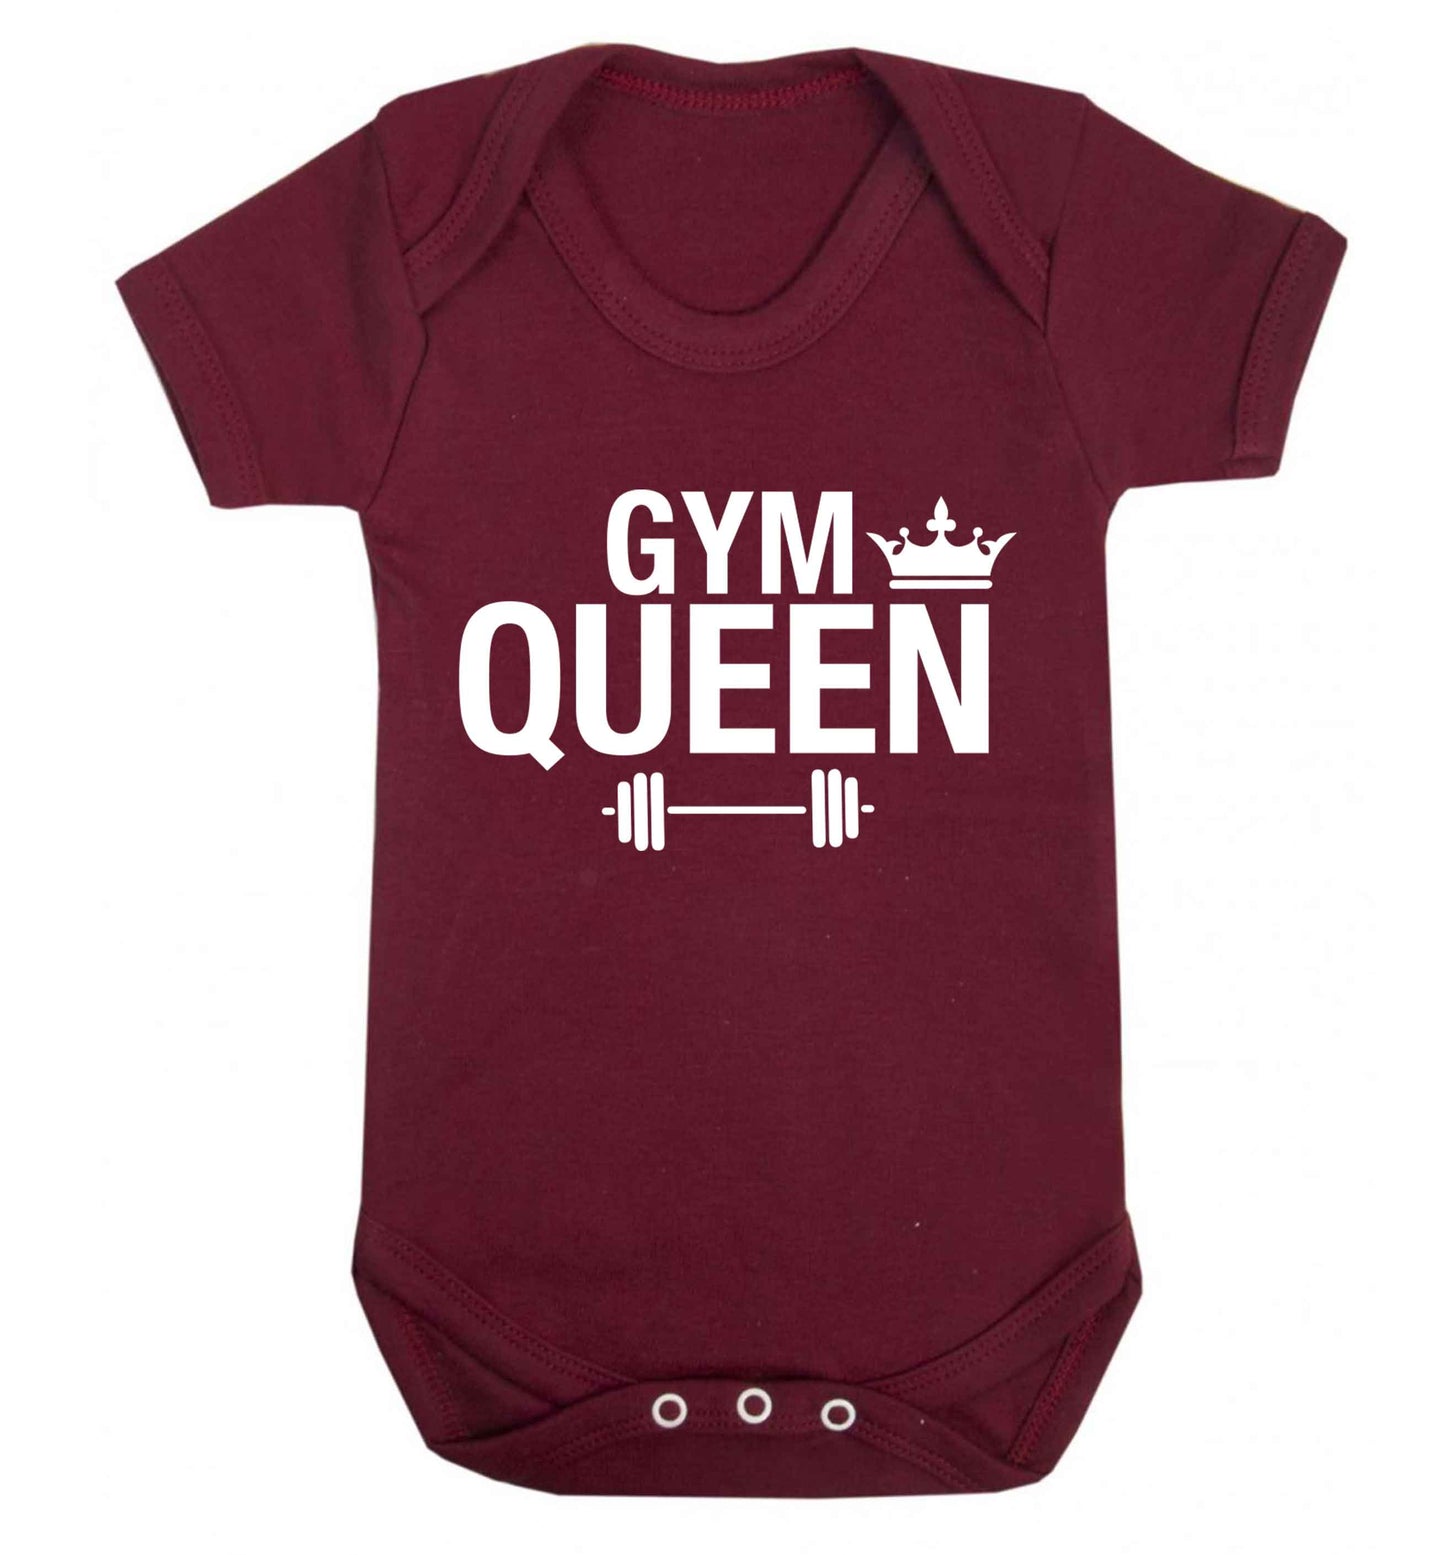 Gym queen Baby Vest maroon 18-24 months